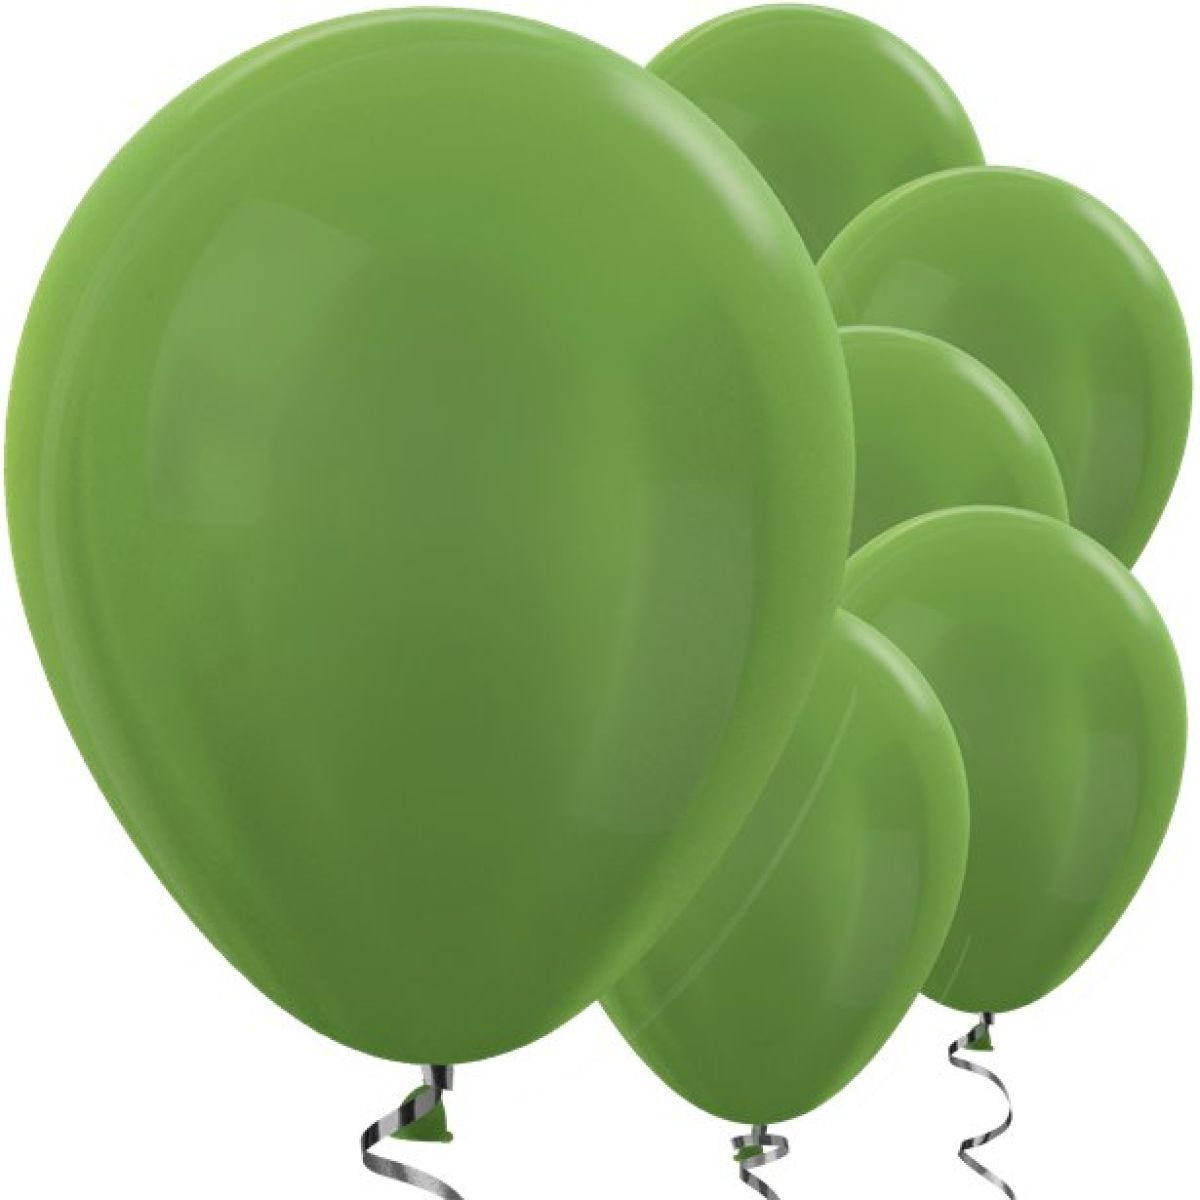 Lime Green Metallic Balloons - 12" Latex Balloons